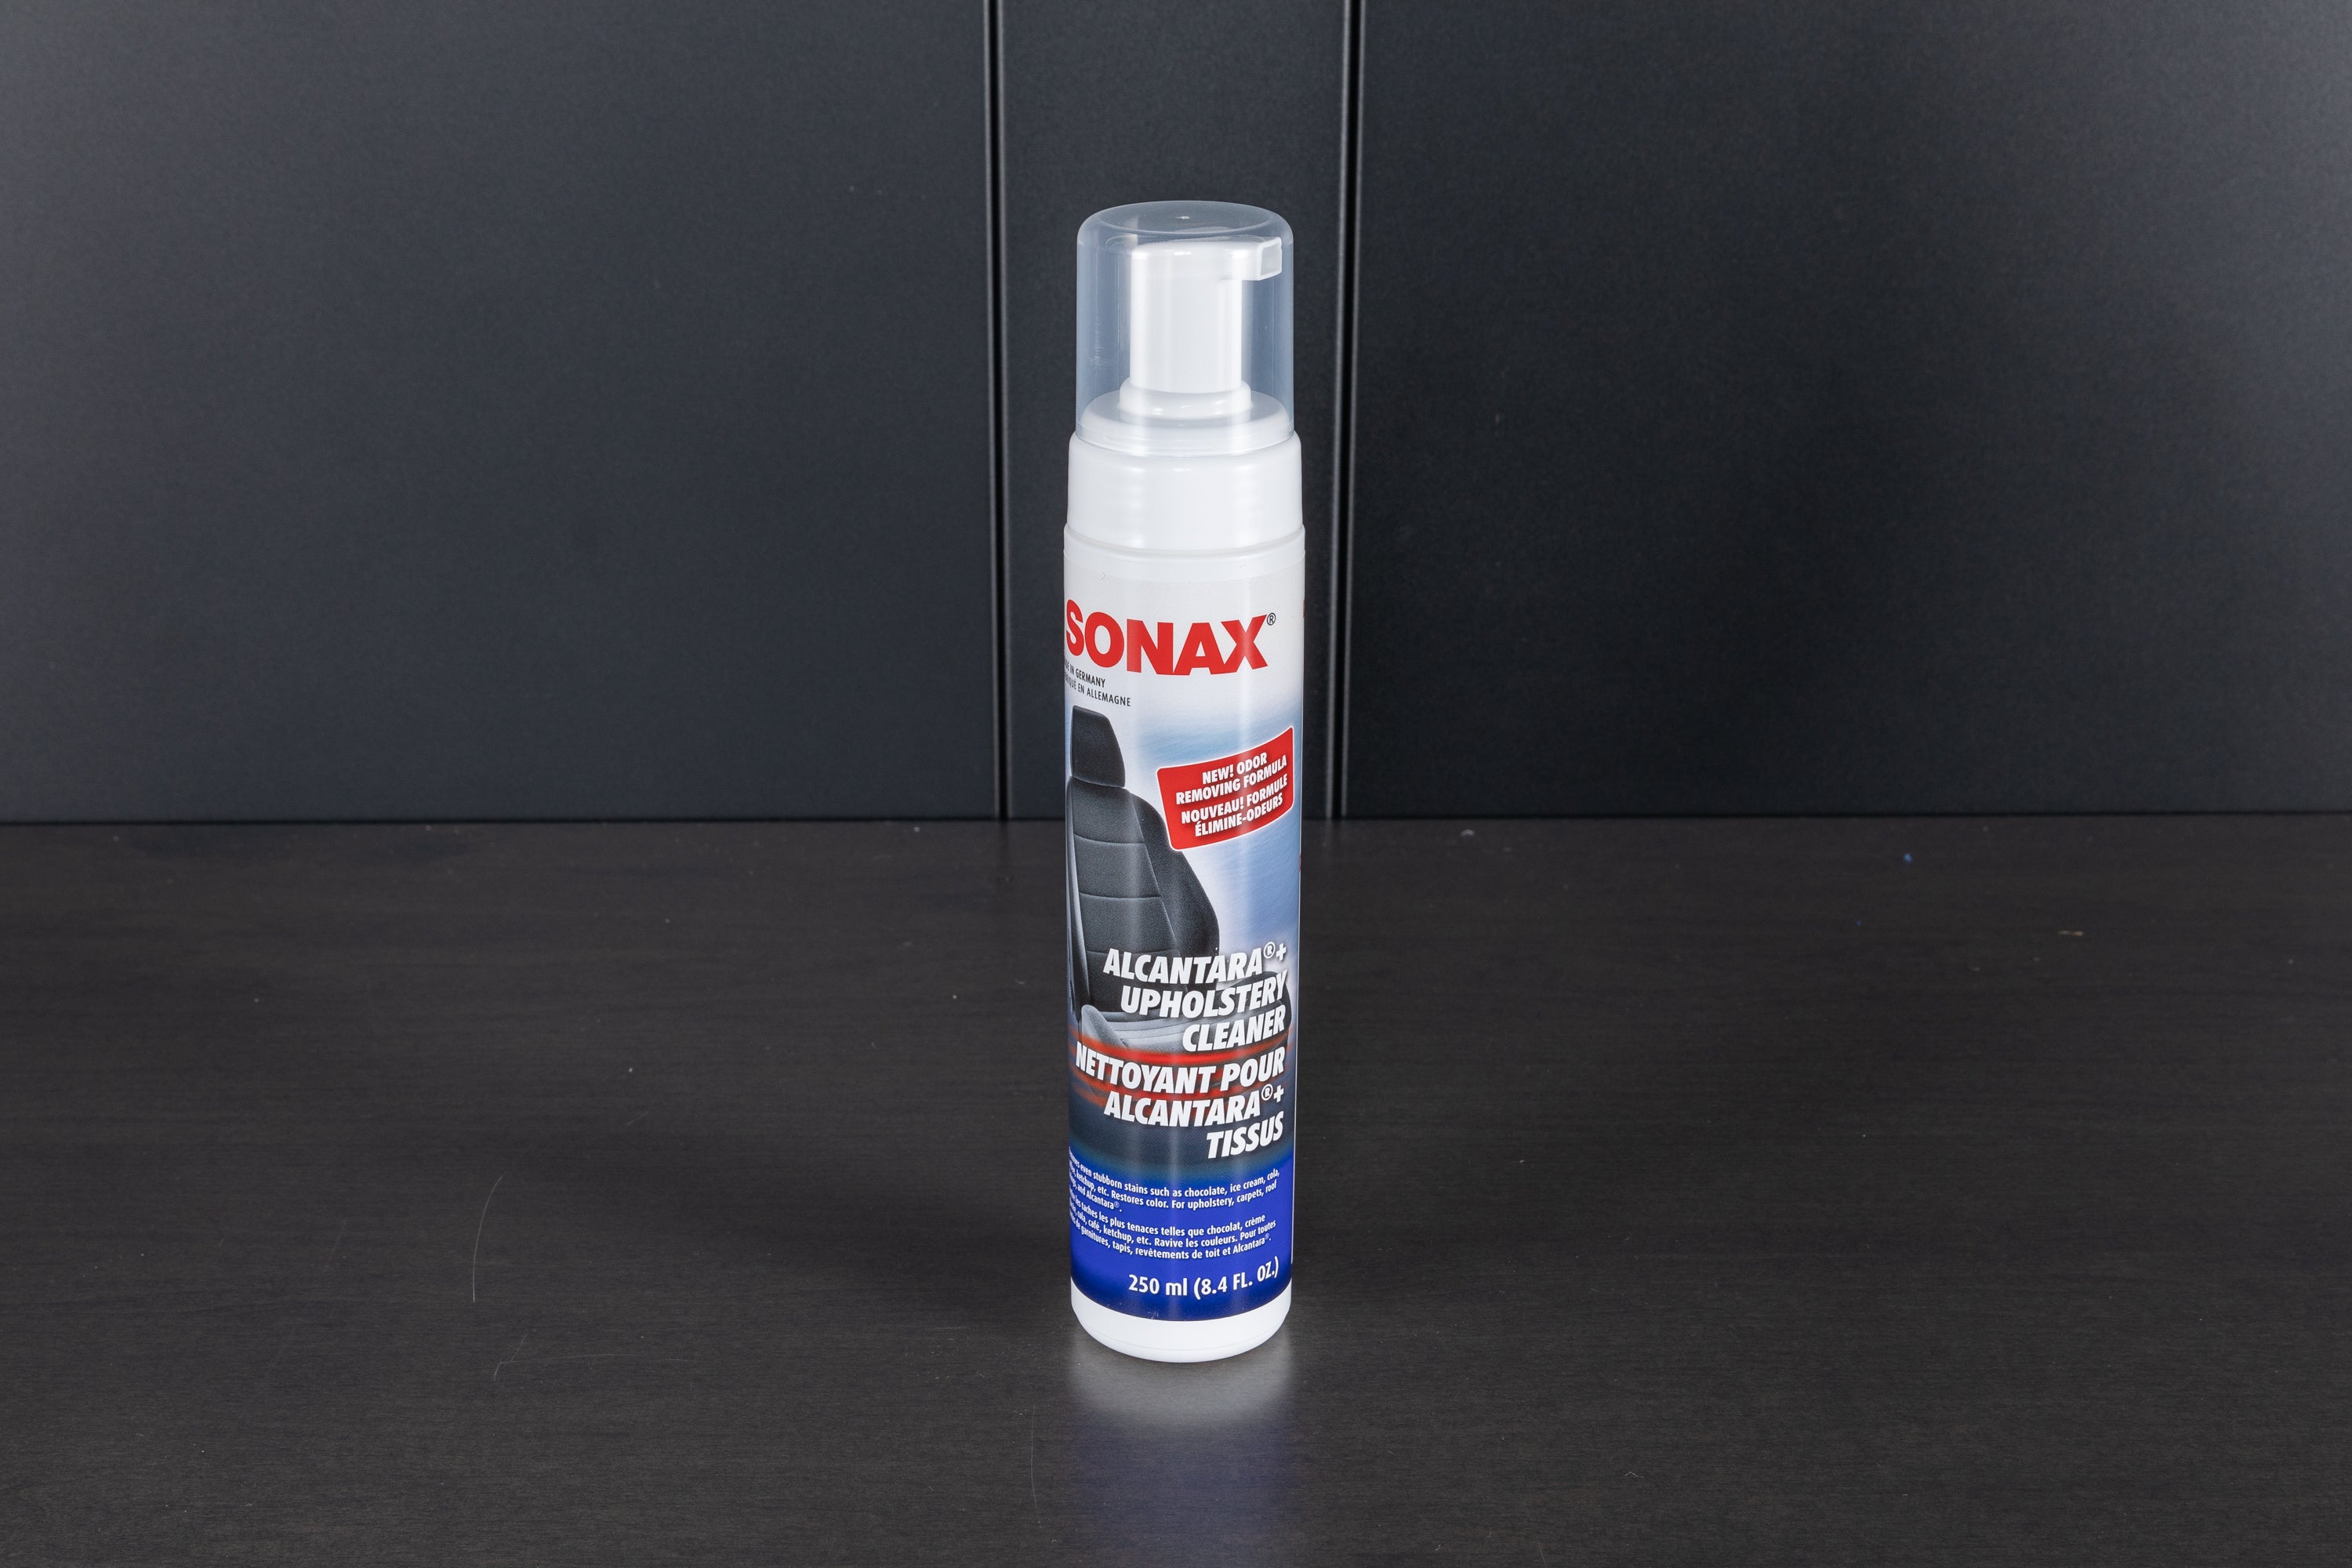 How to Clean Alcantara - Sonax Alcantara & Upholstery Cleaner